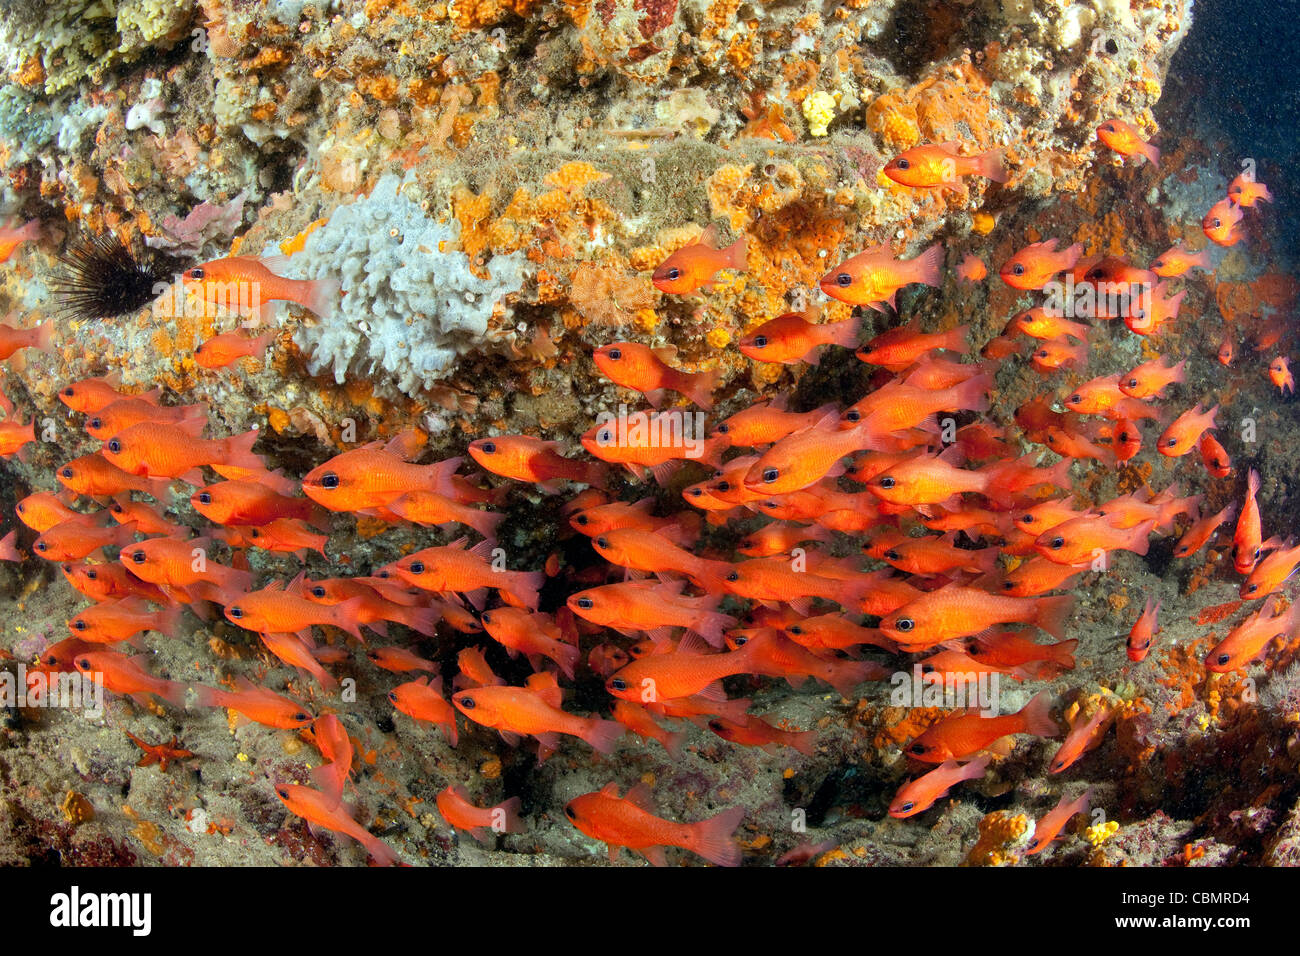 Shoal of Mediterranean Cardinalfish, Apogon imberbis, Ischia, Mediterranean Sea, Italy Stock Photo